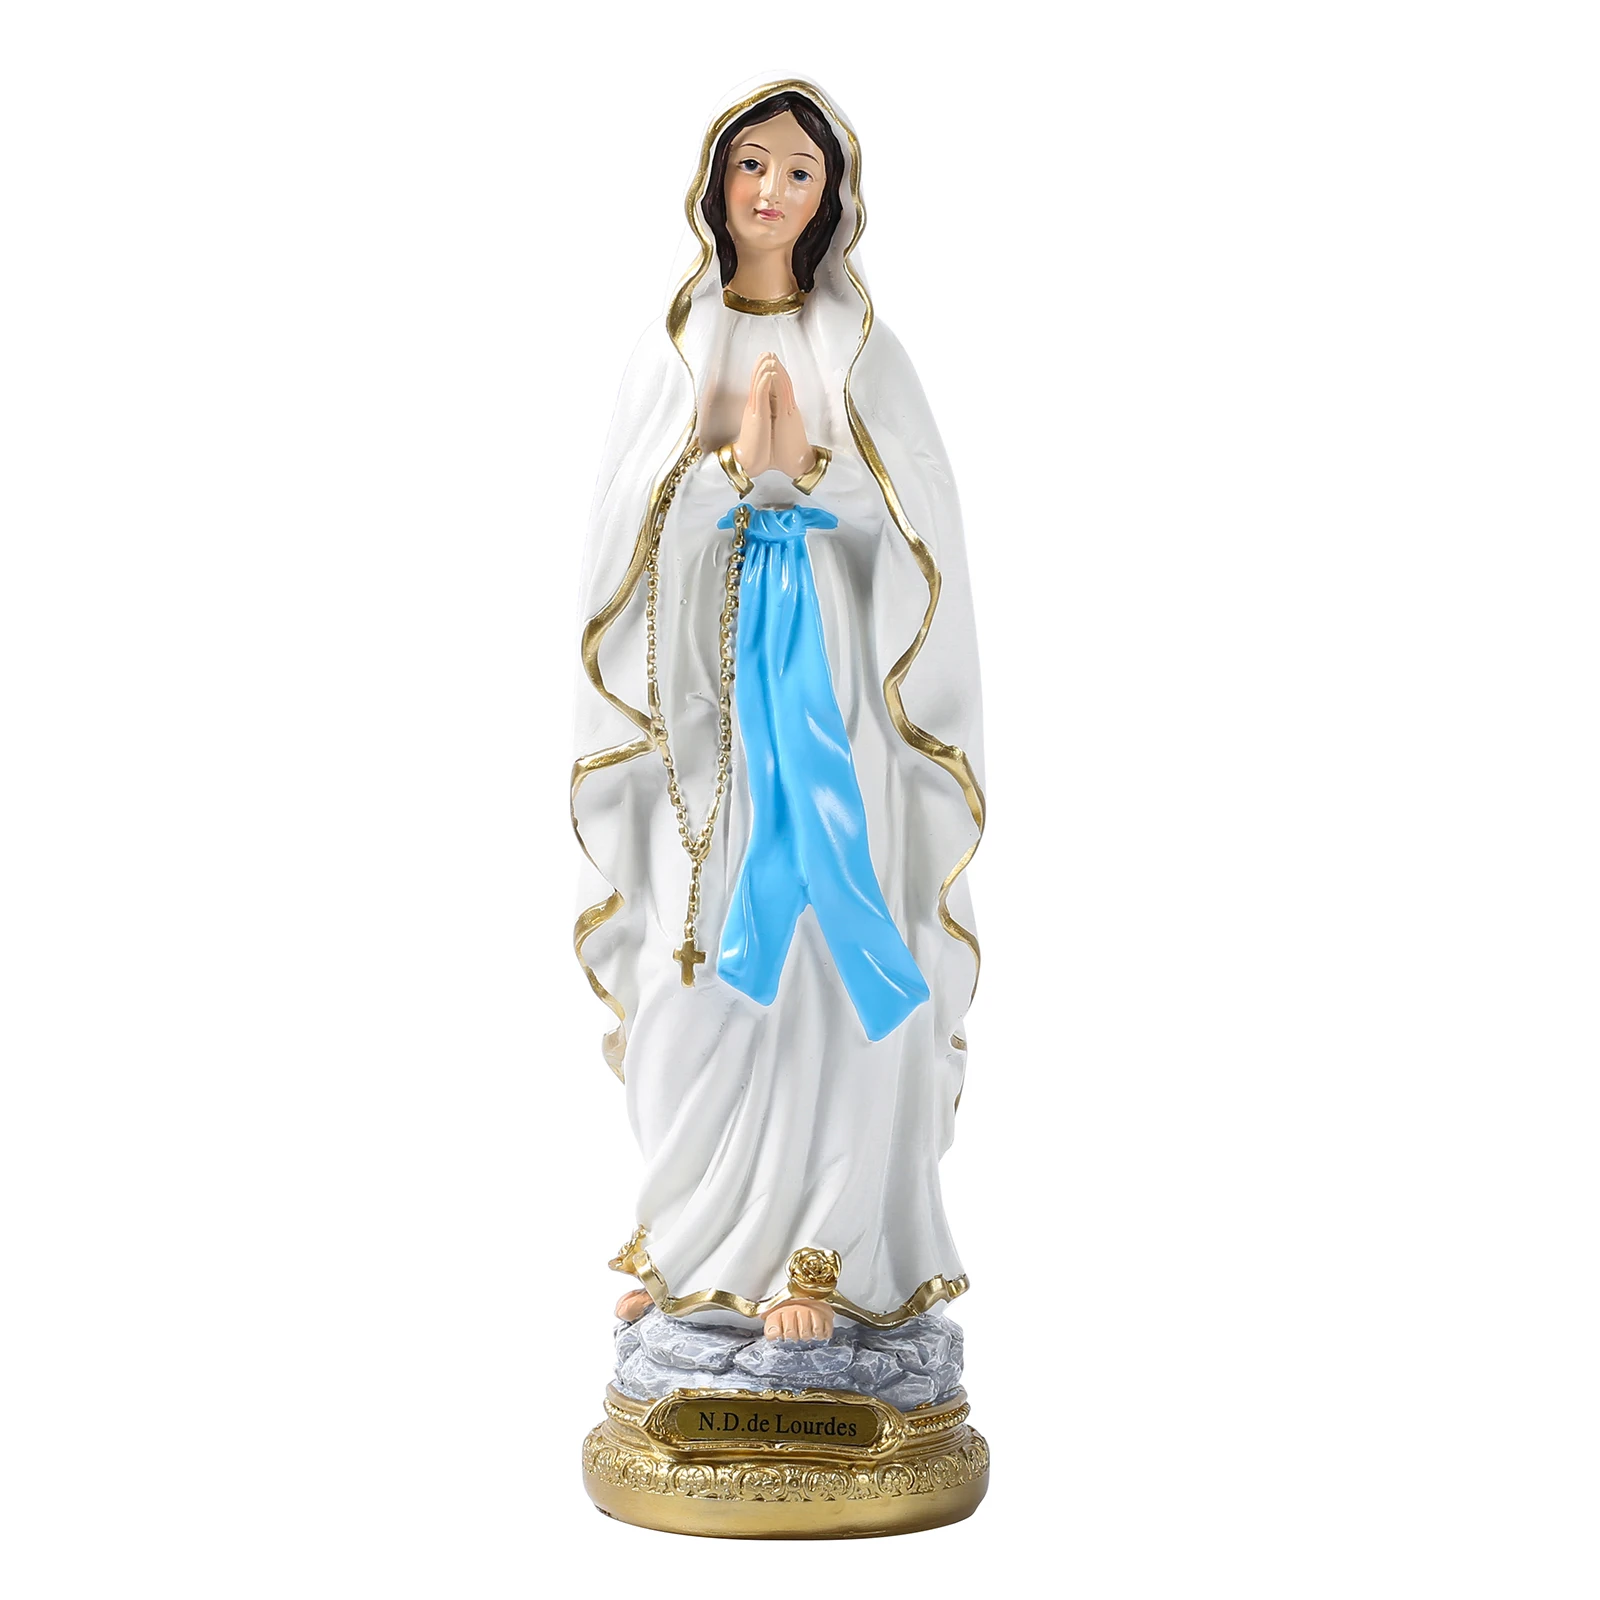 Catholic Resin Madonna Virgin Mary Statue Figure Handmade Figurine Religious Wedding Gift Xmas Desktop Decoration